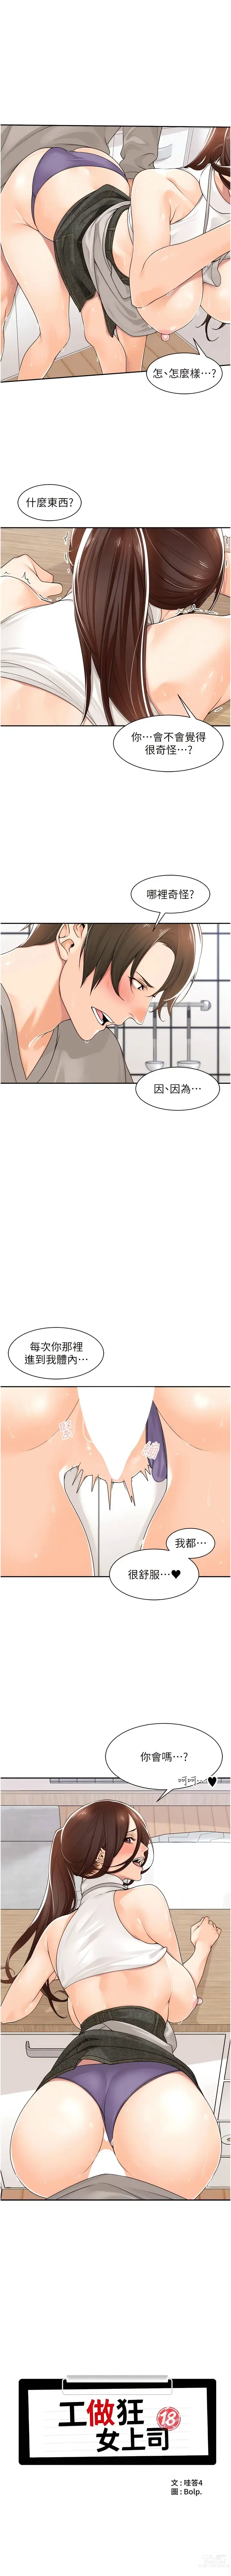 Page 132 of manga 工做狂女上司 1-10話